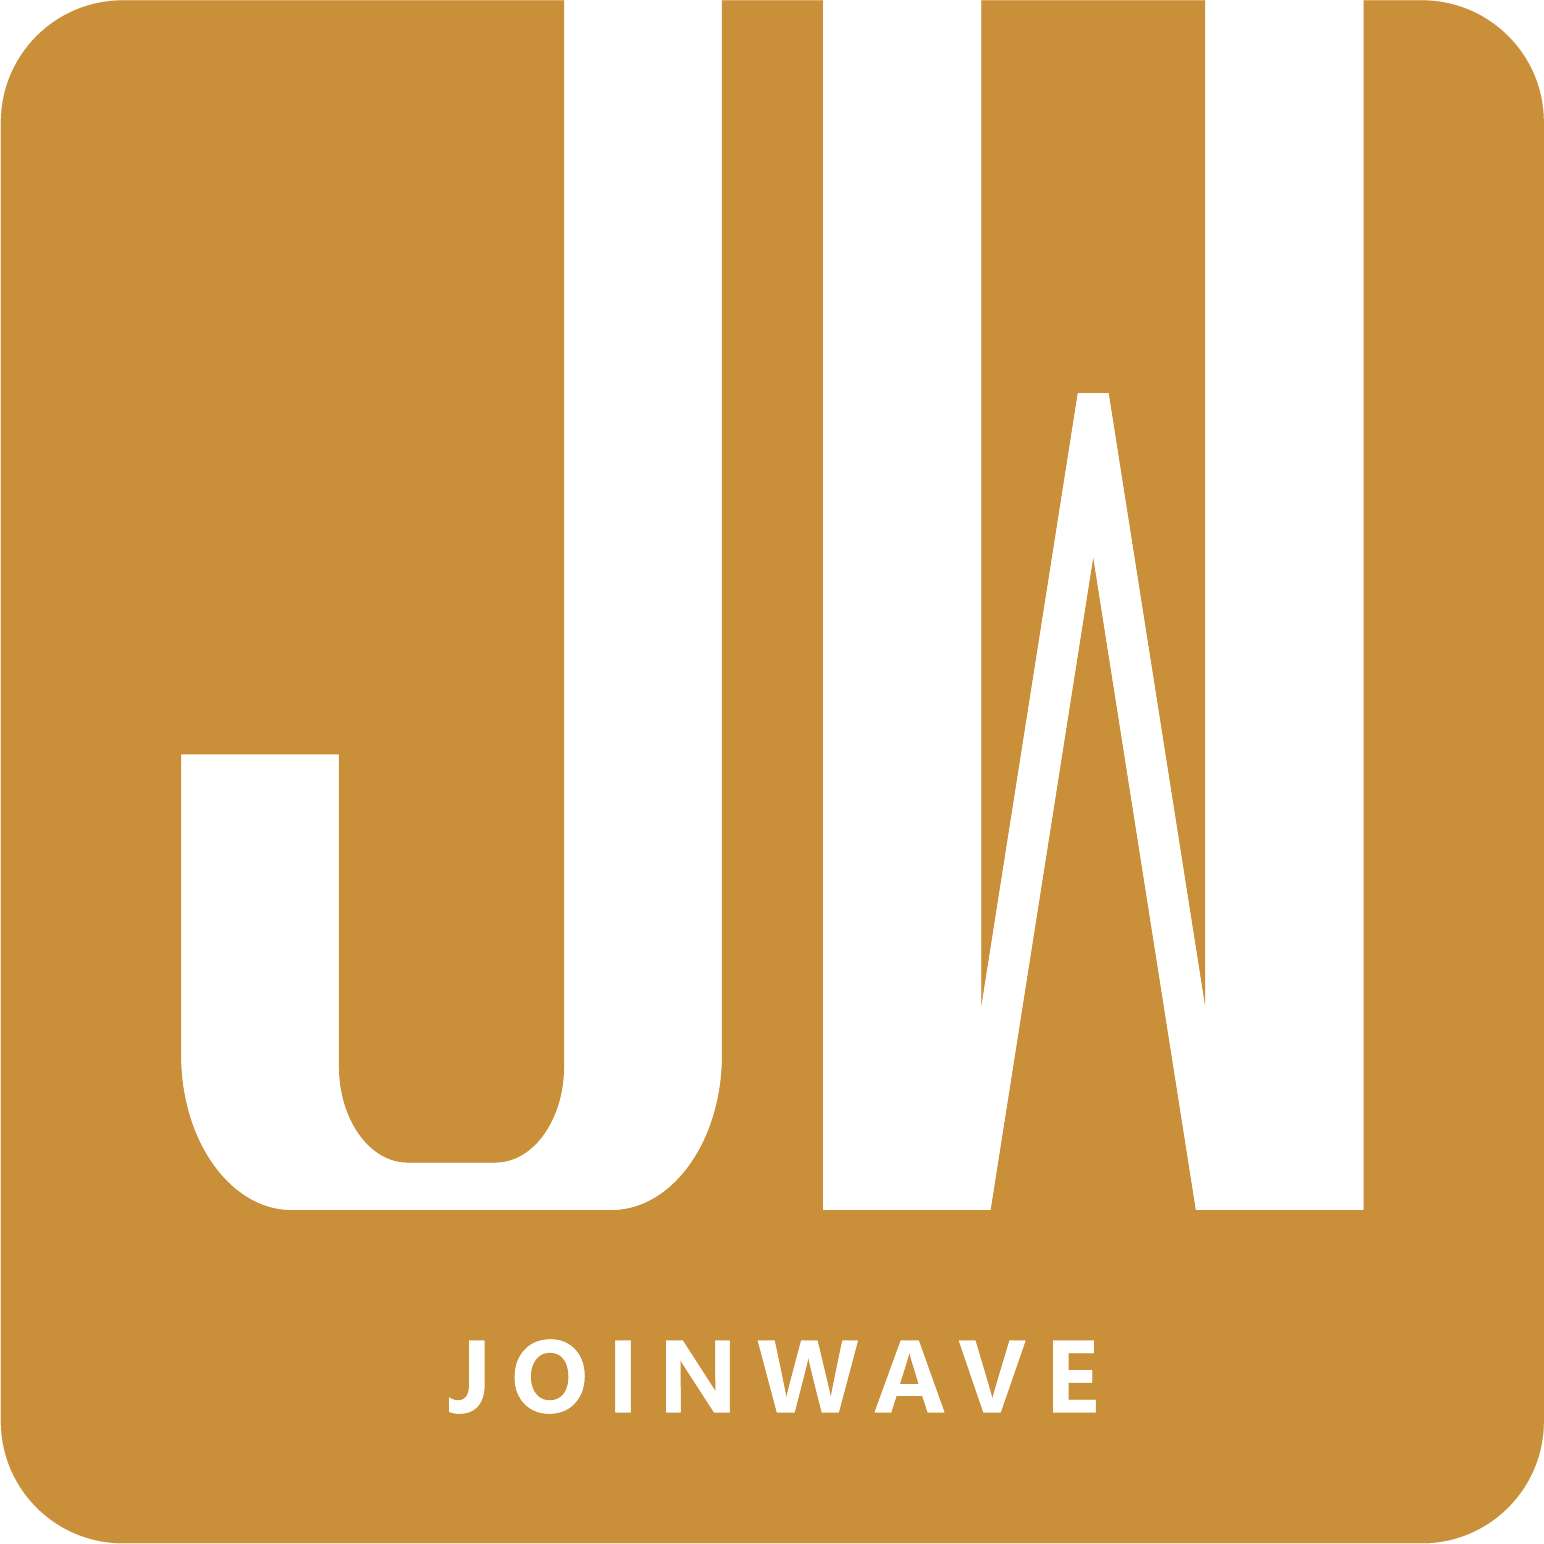 Joinwavehr logo